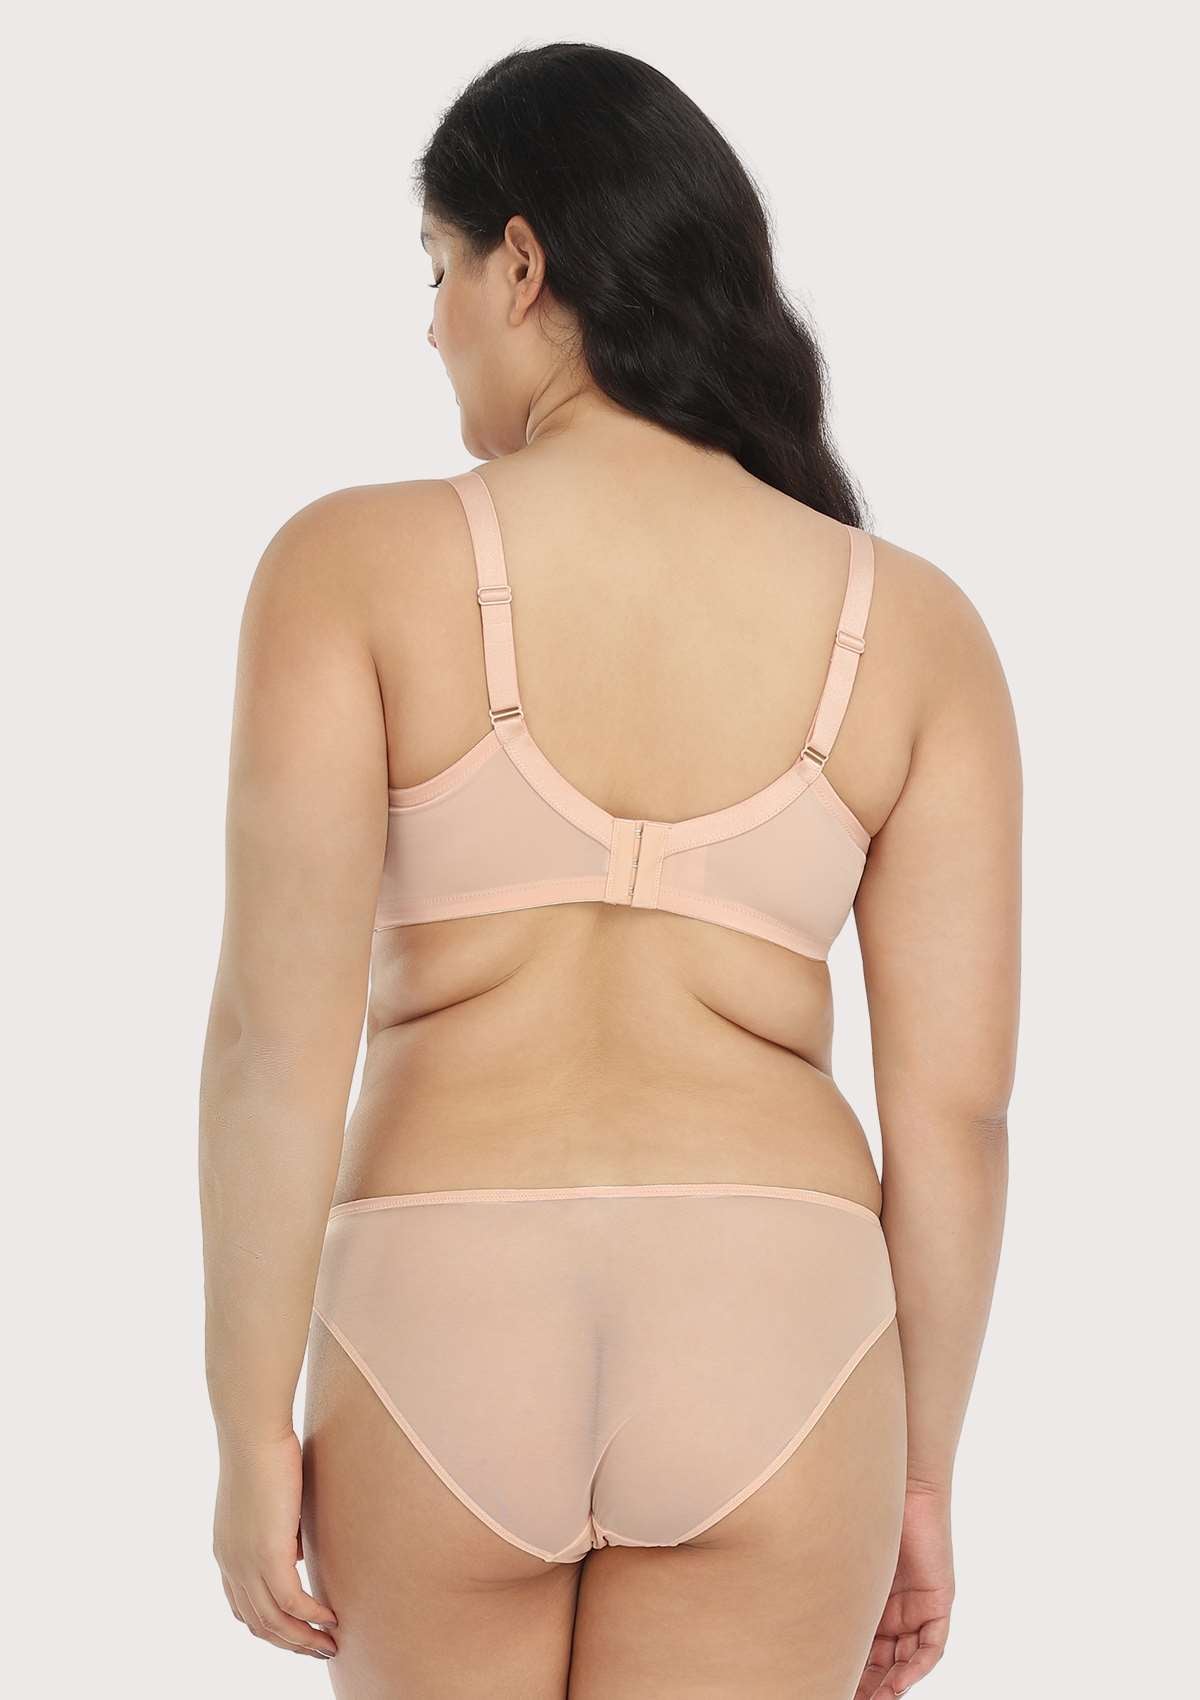 HSIA Sunflower Matching Bra And Panties Set: Comfortable Plus Size Bra - Pink / 46 / D